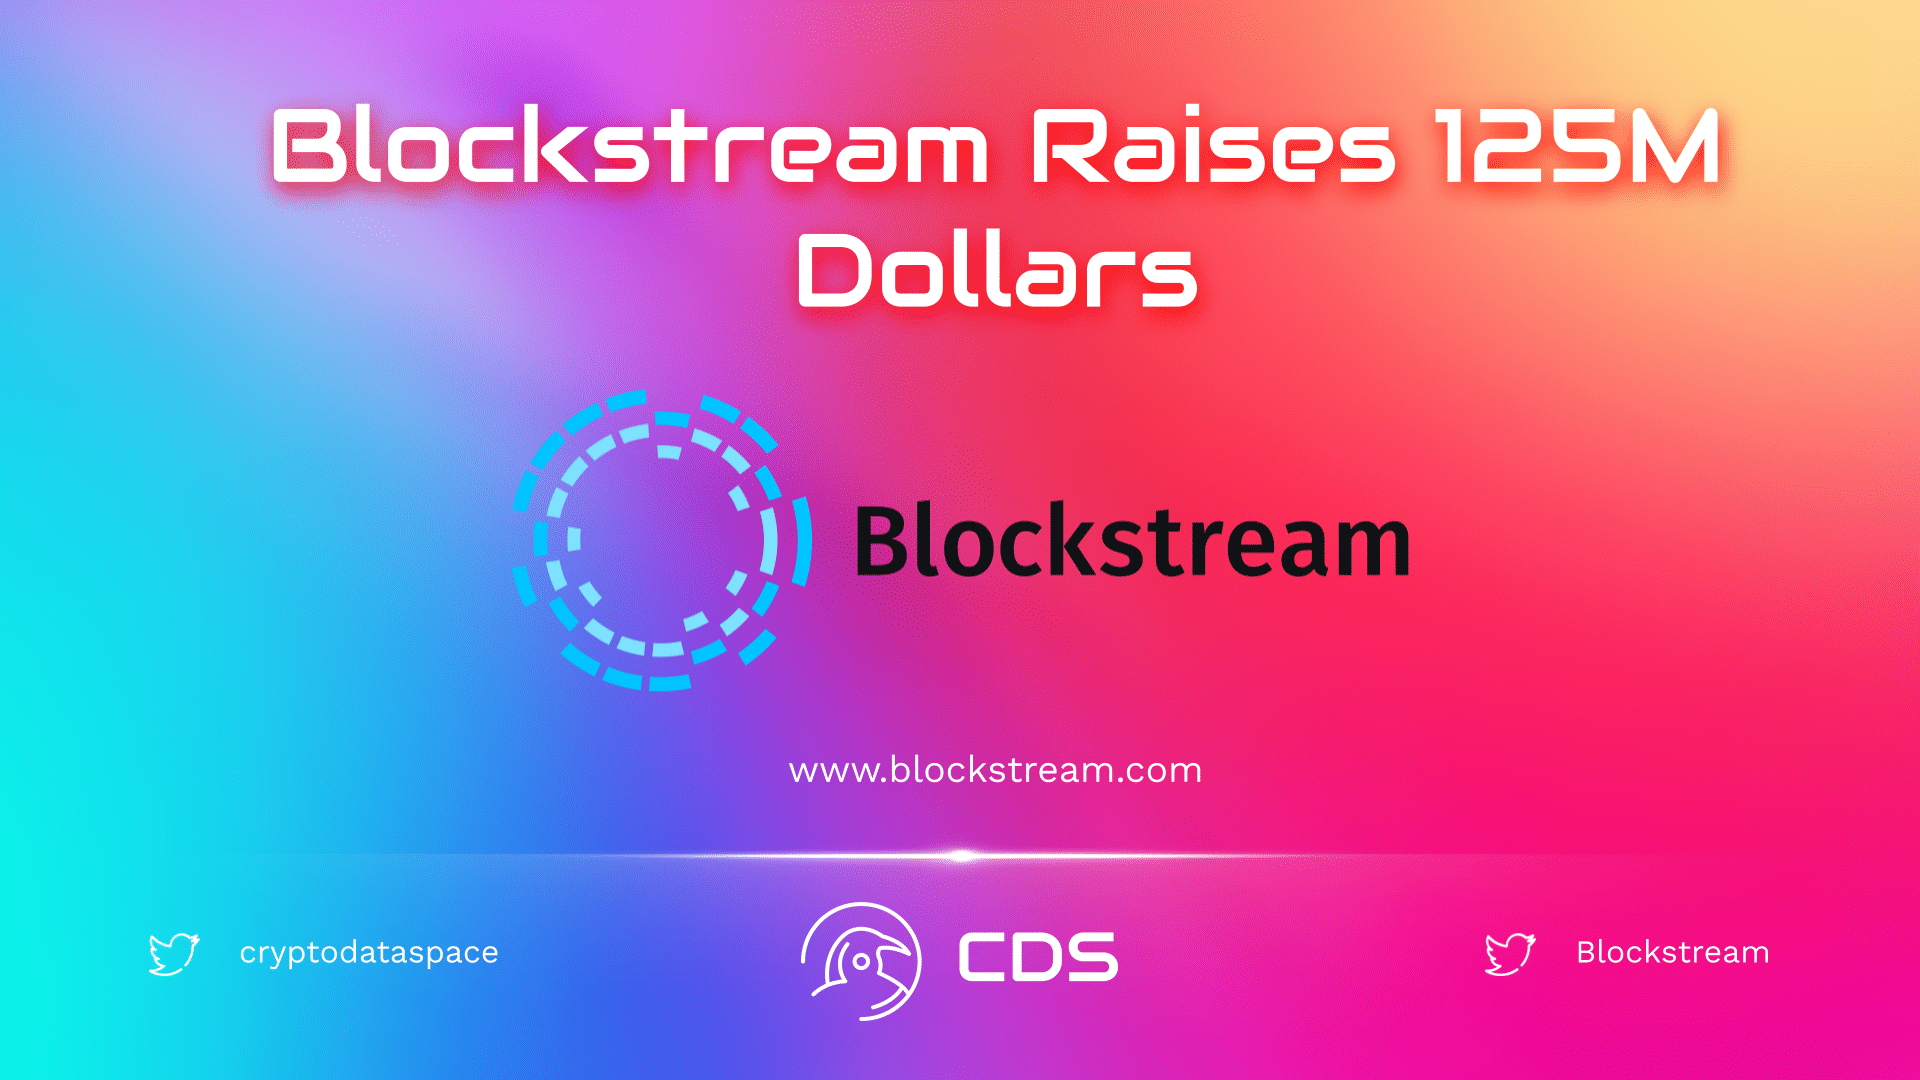 Blockstream Raises 125M Dollars